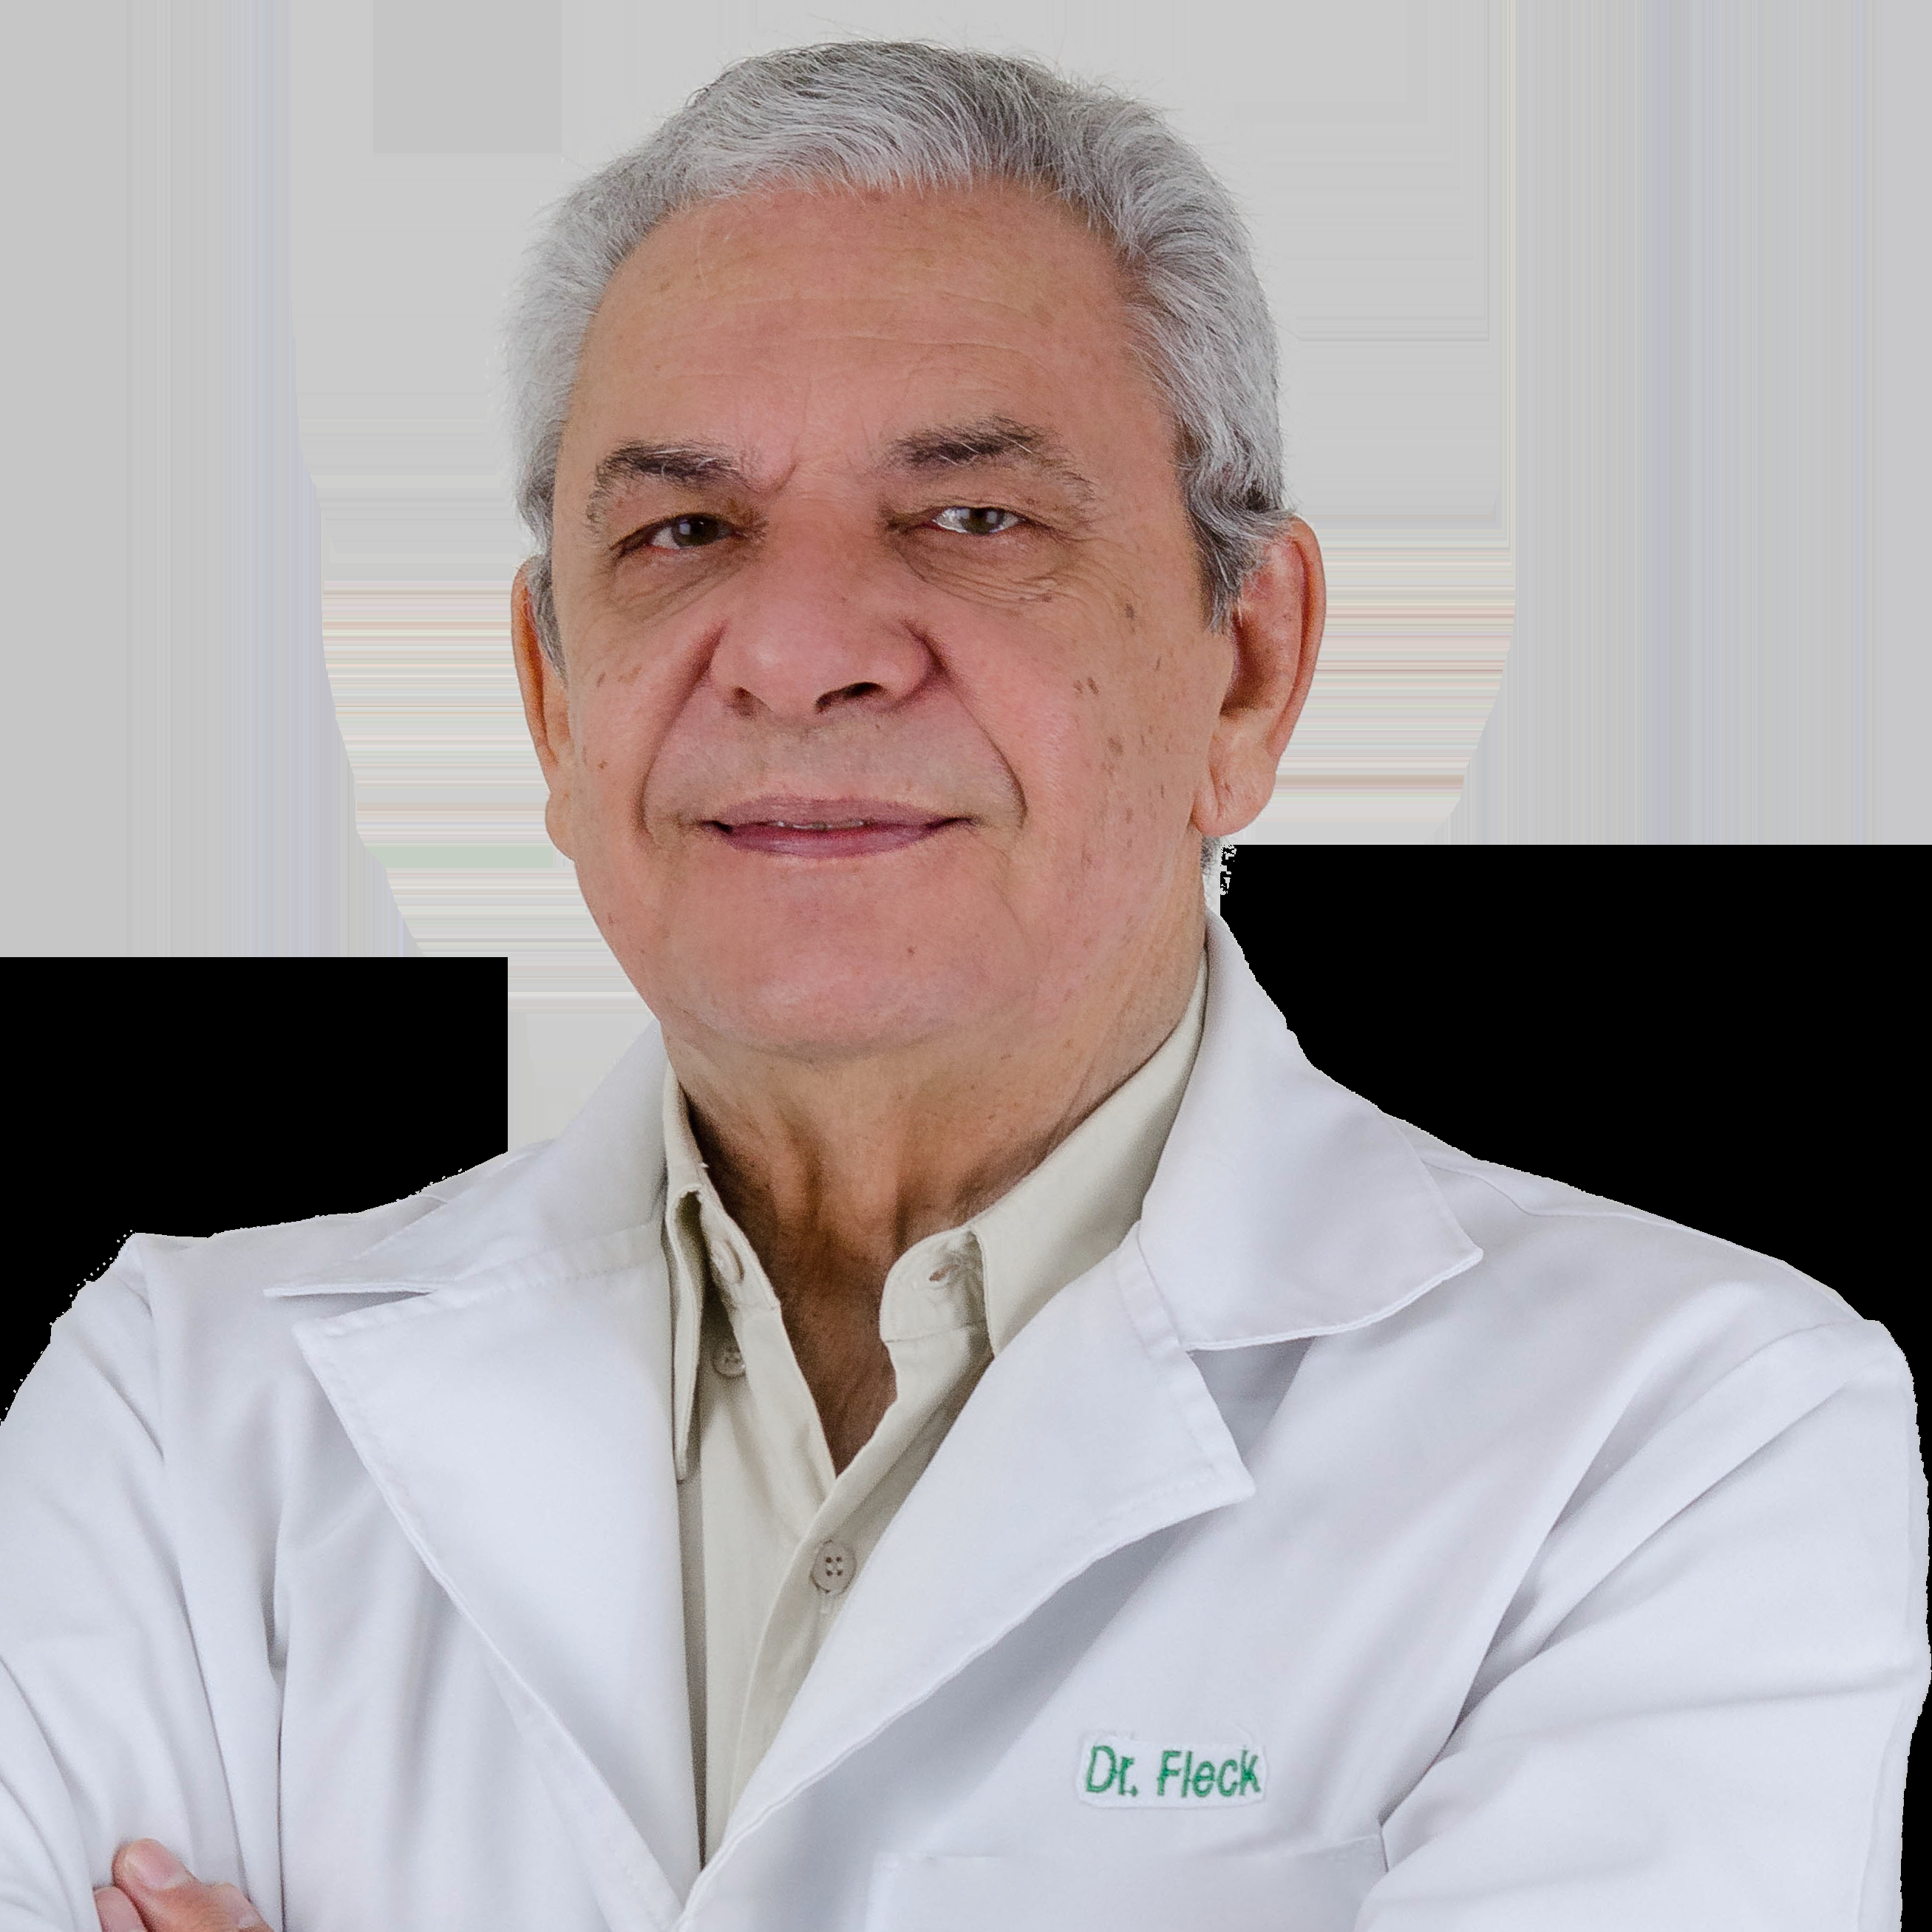 Ortopedista e Traumatologista em Caxias do Sul - RS: 10